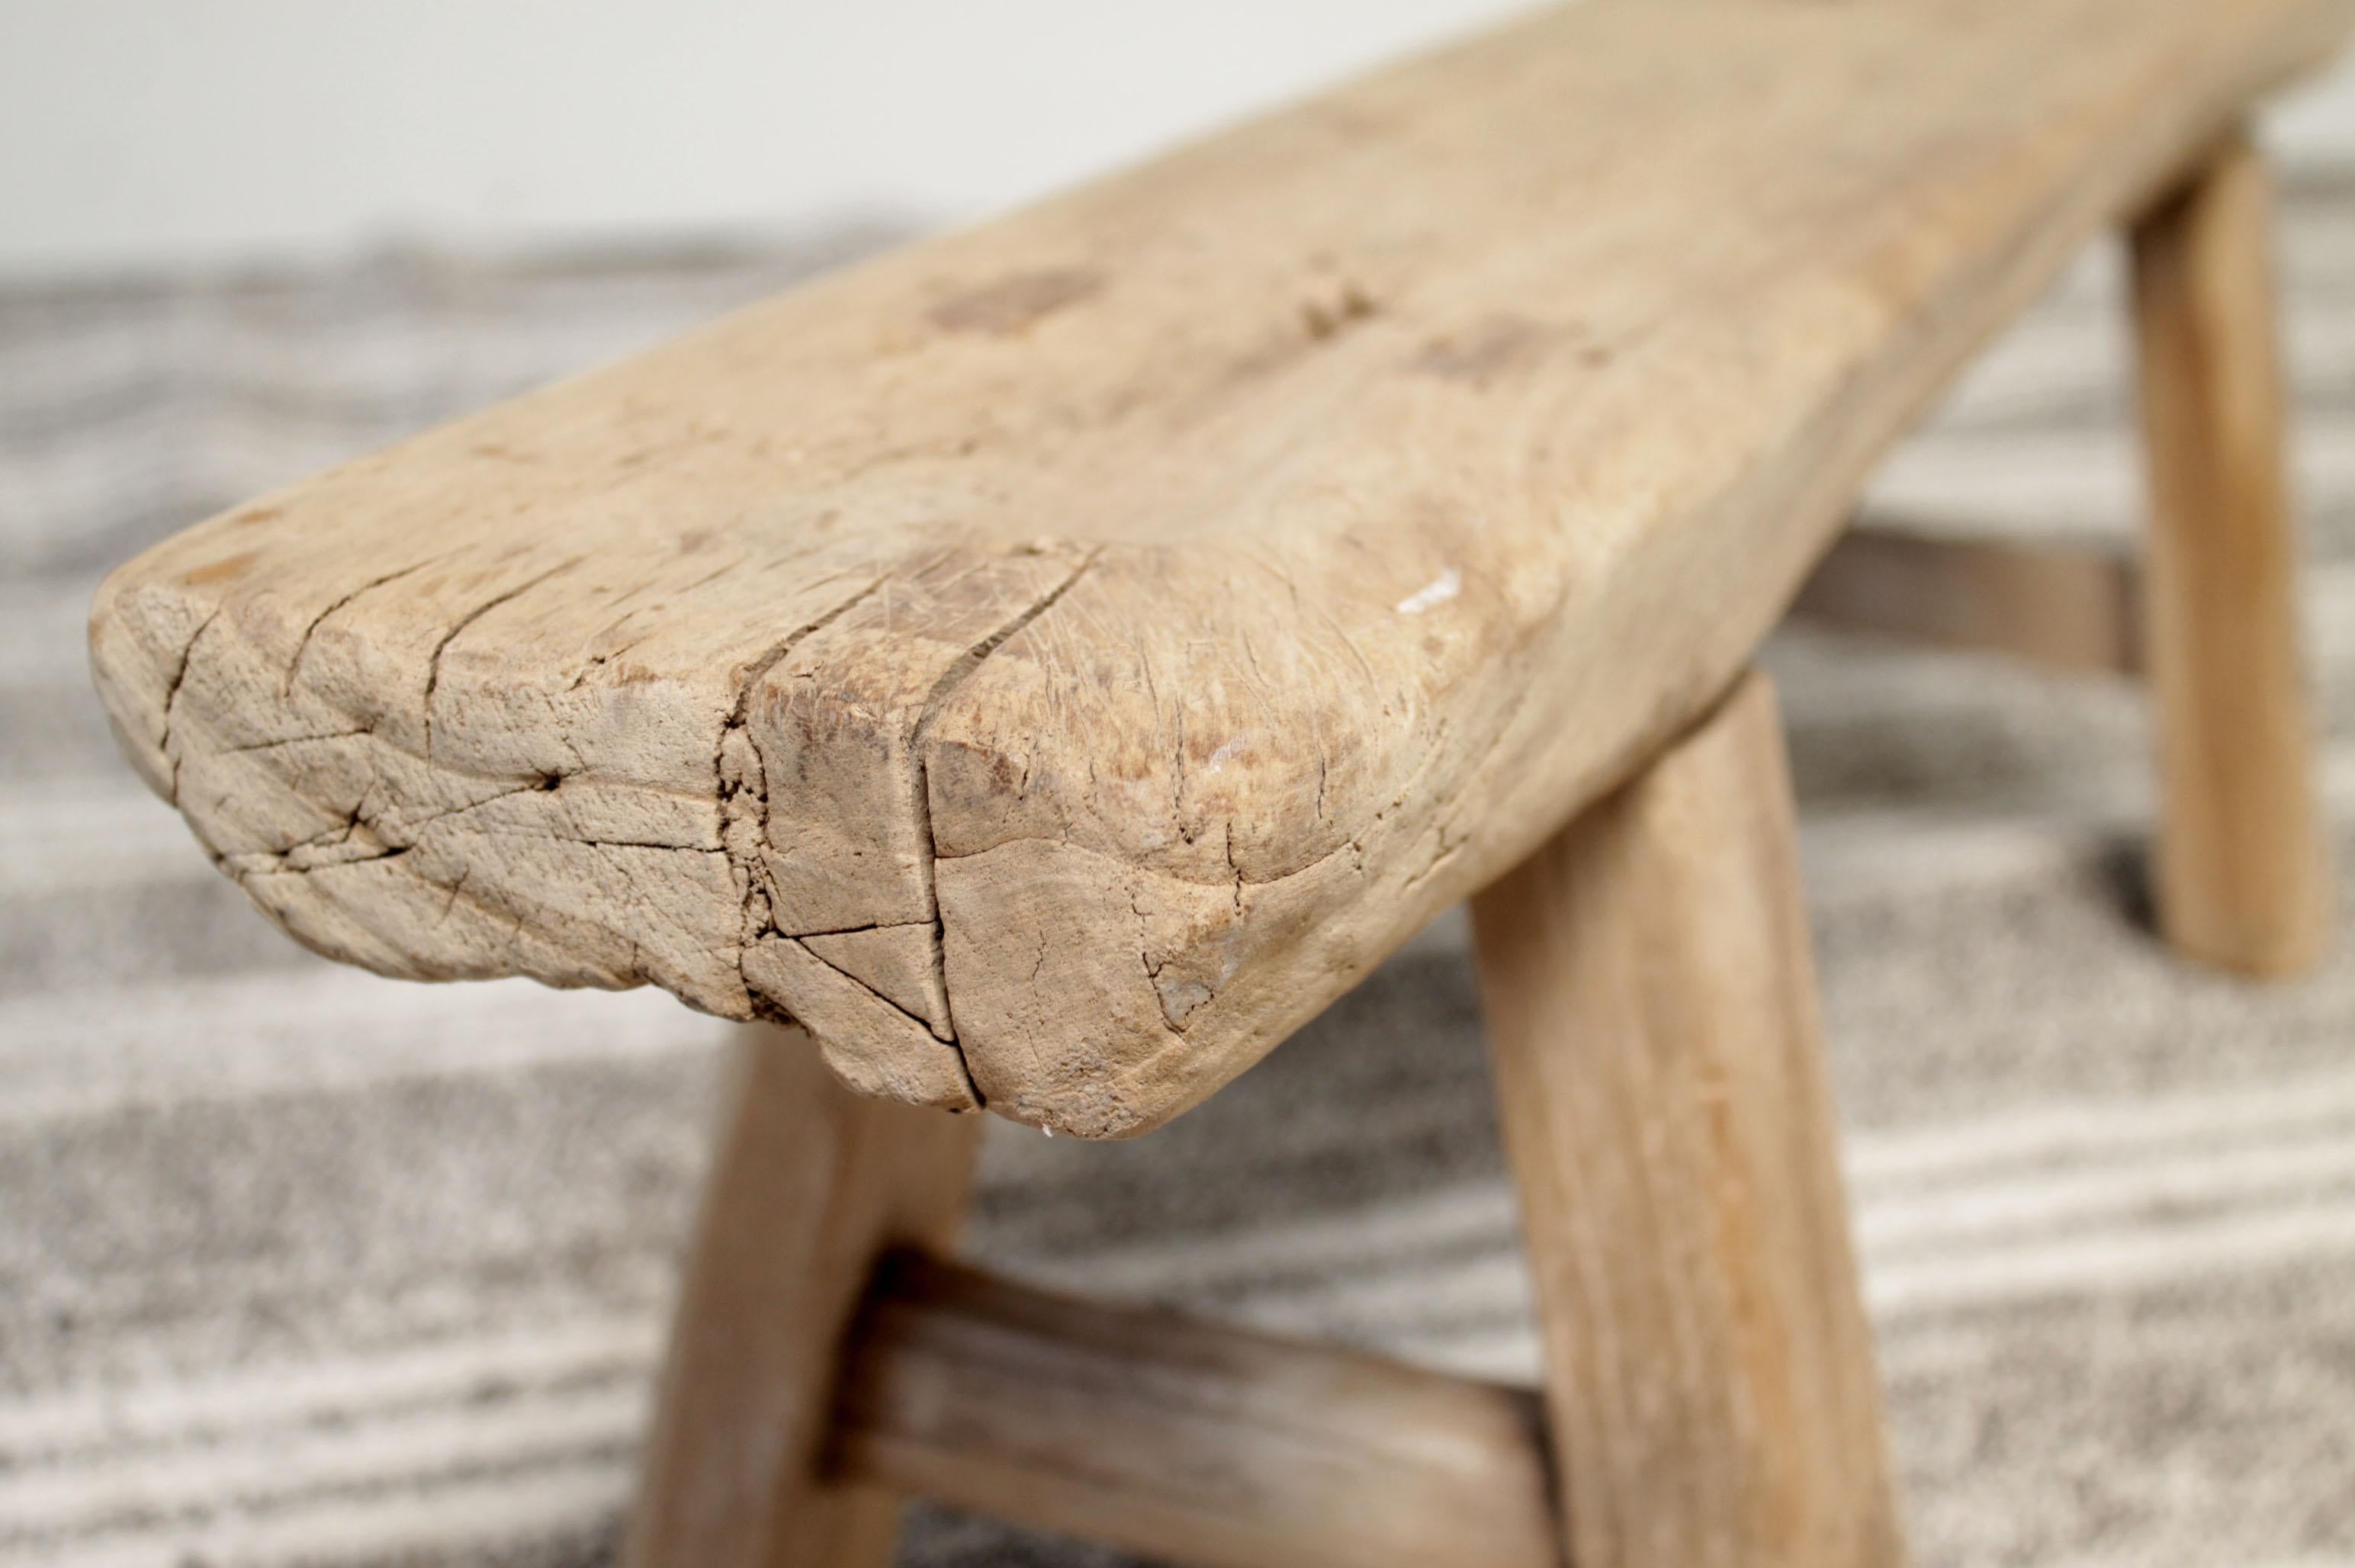 Vintage Chinese elmwood stool raw natural wood finish
Measures: 29